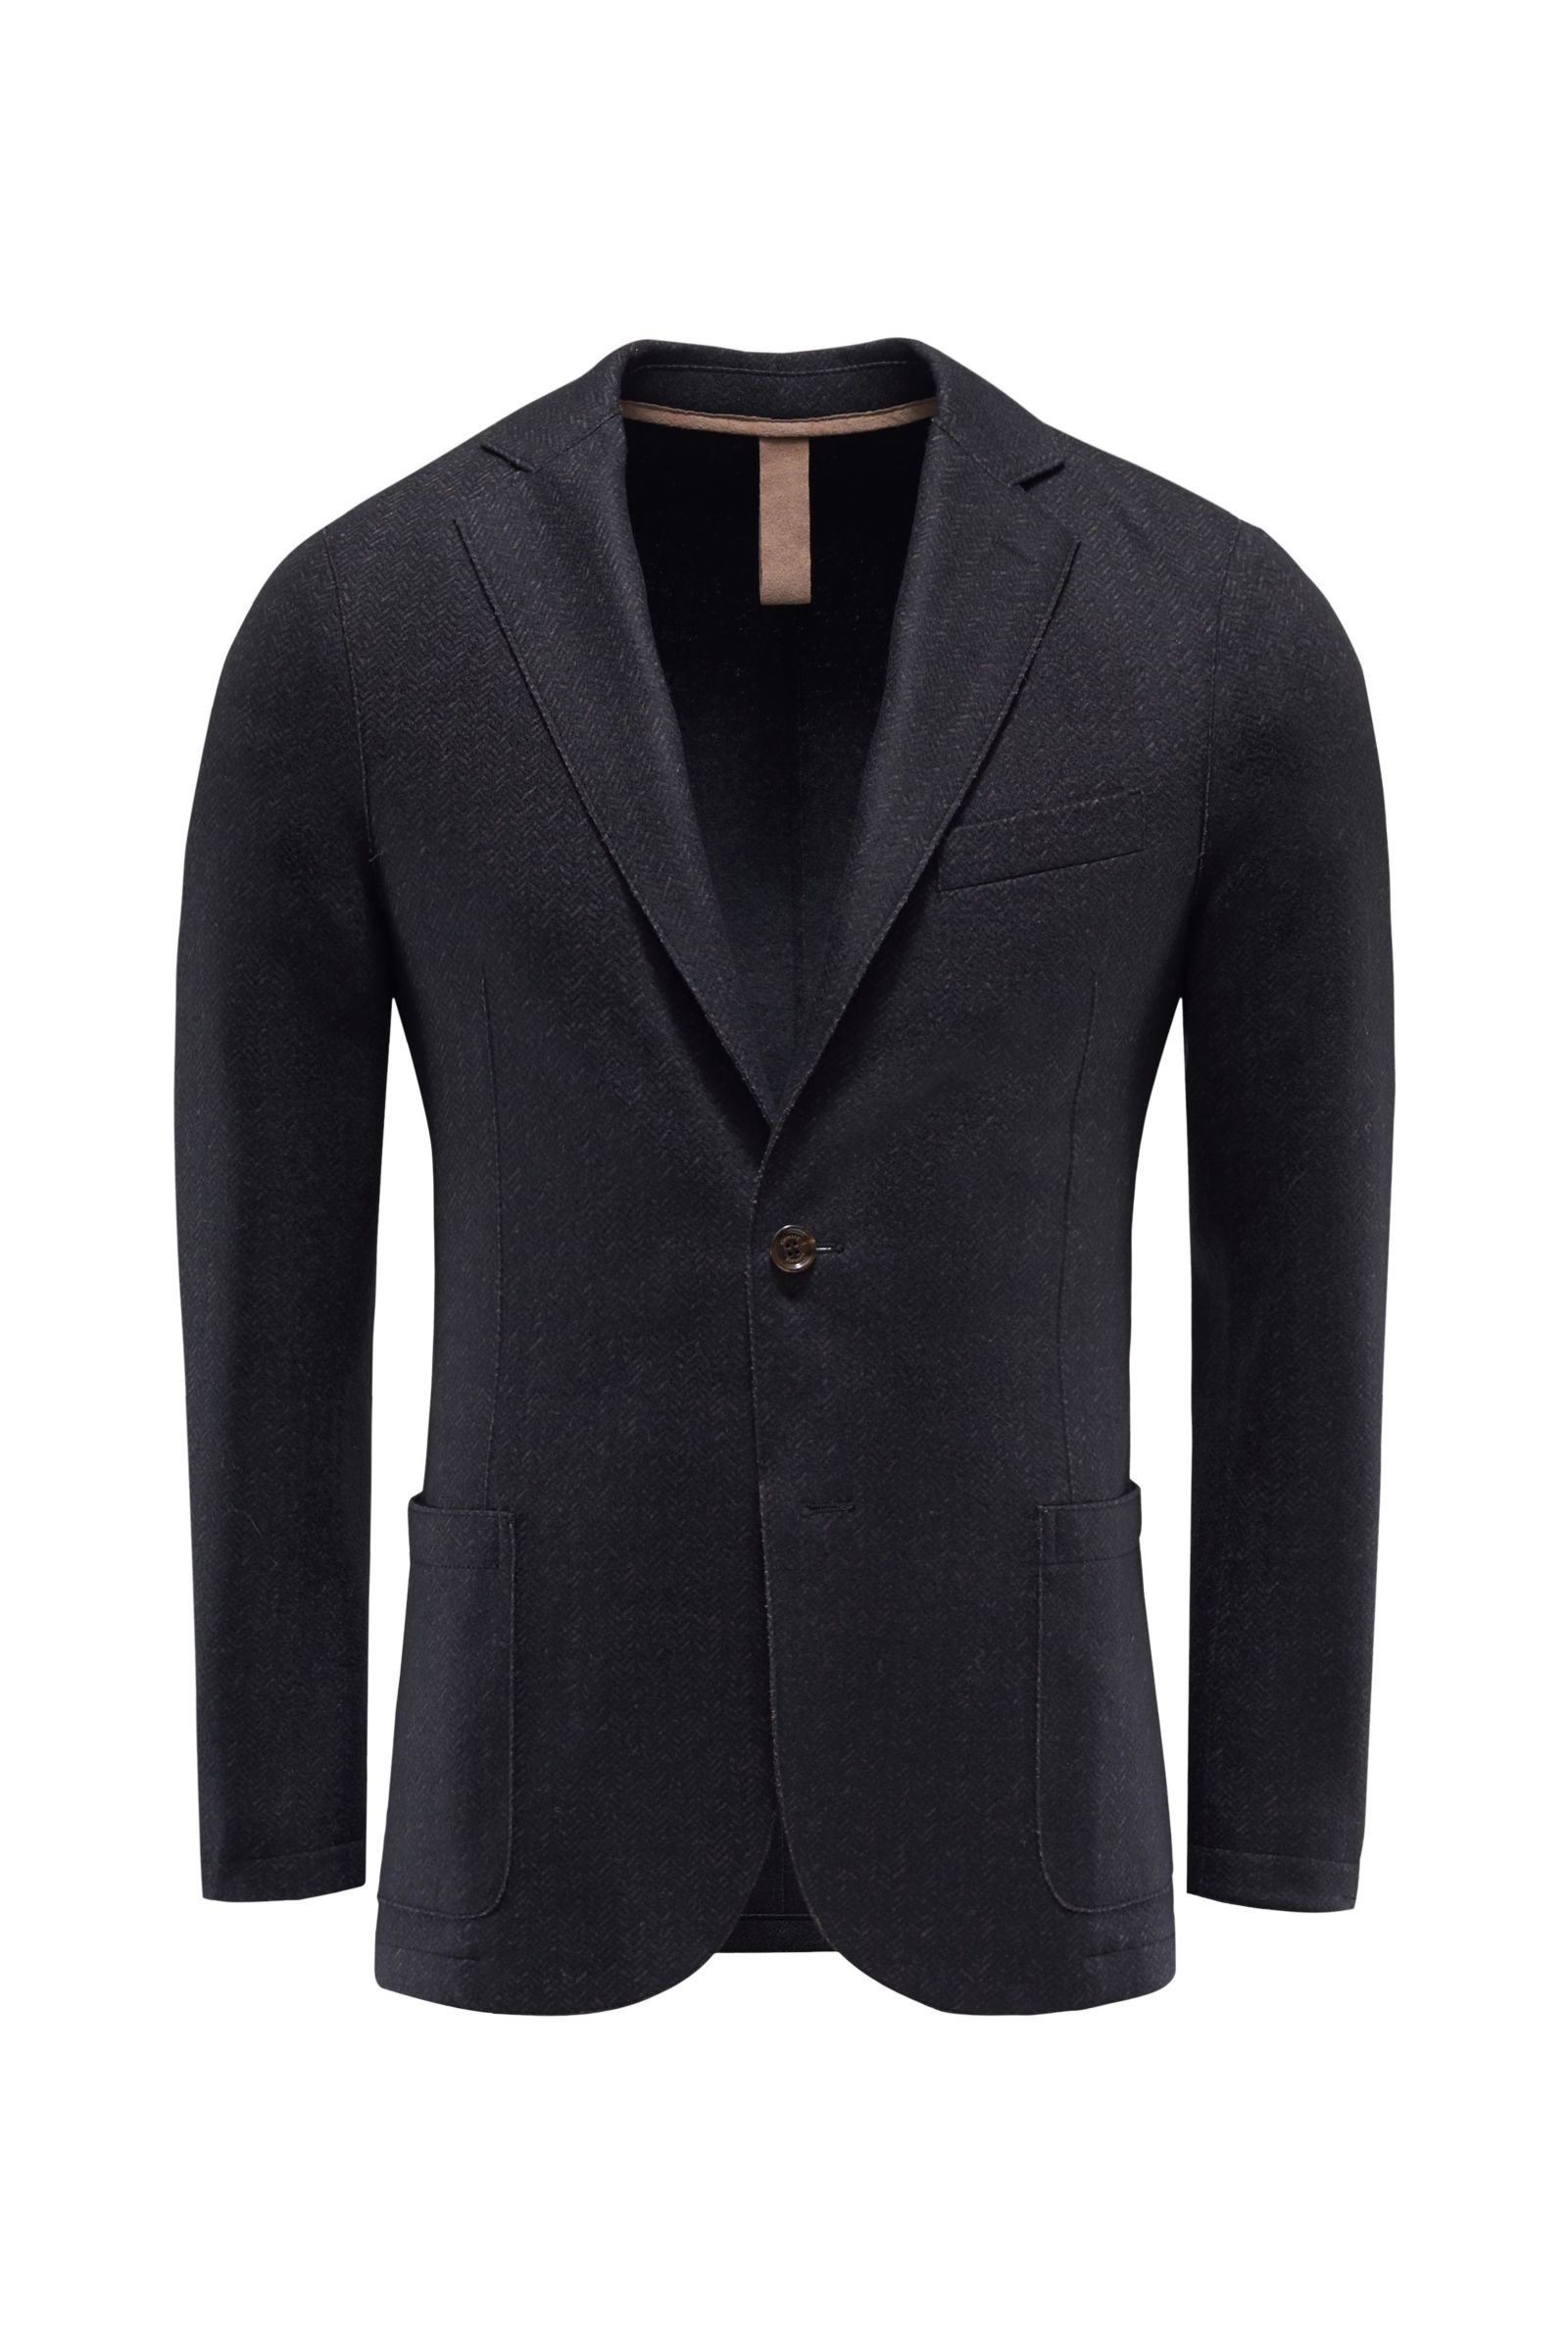 Jersey smart-casual jacket dark brown patterned